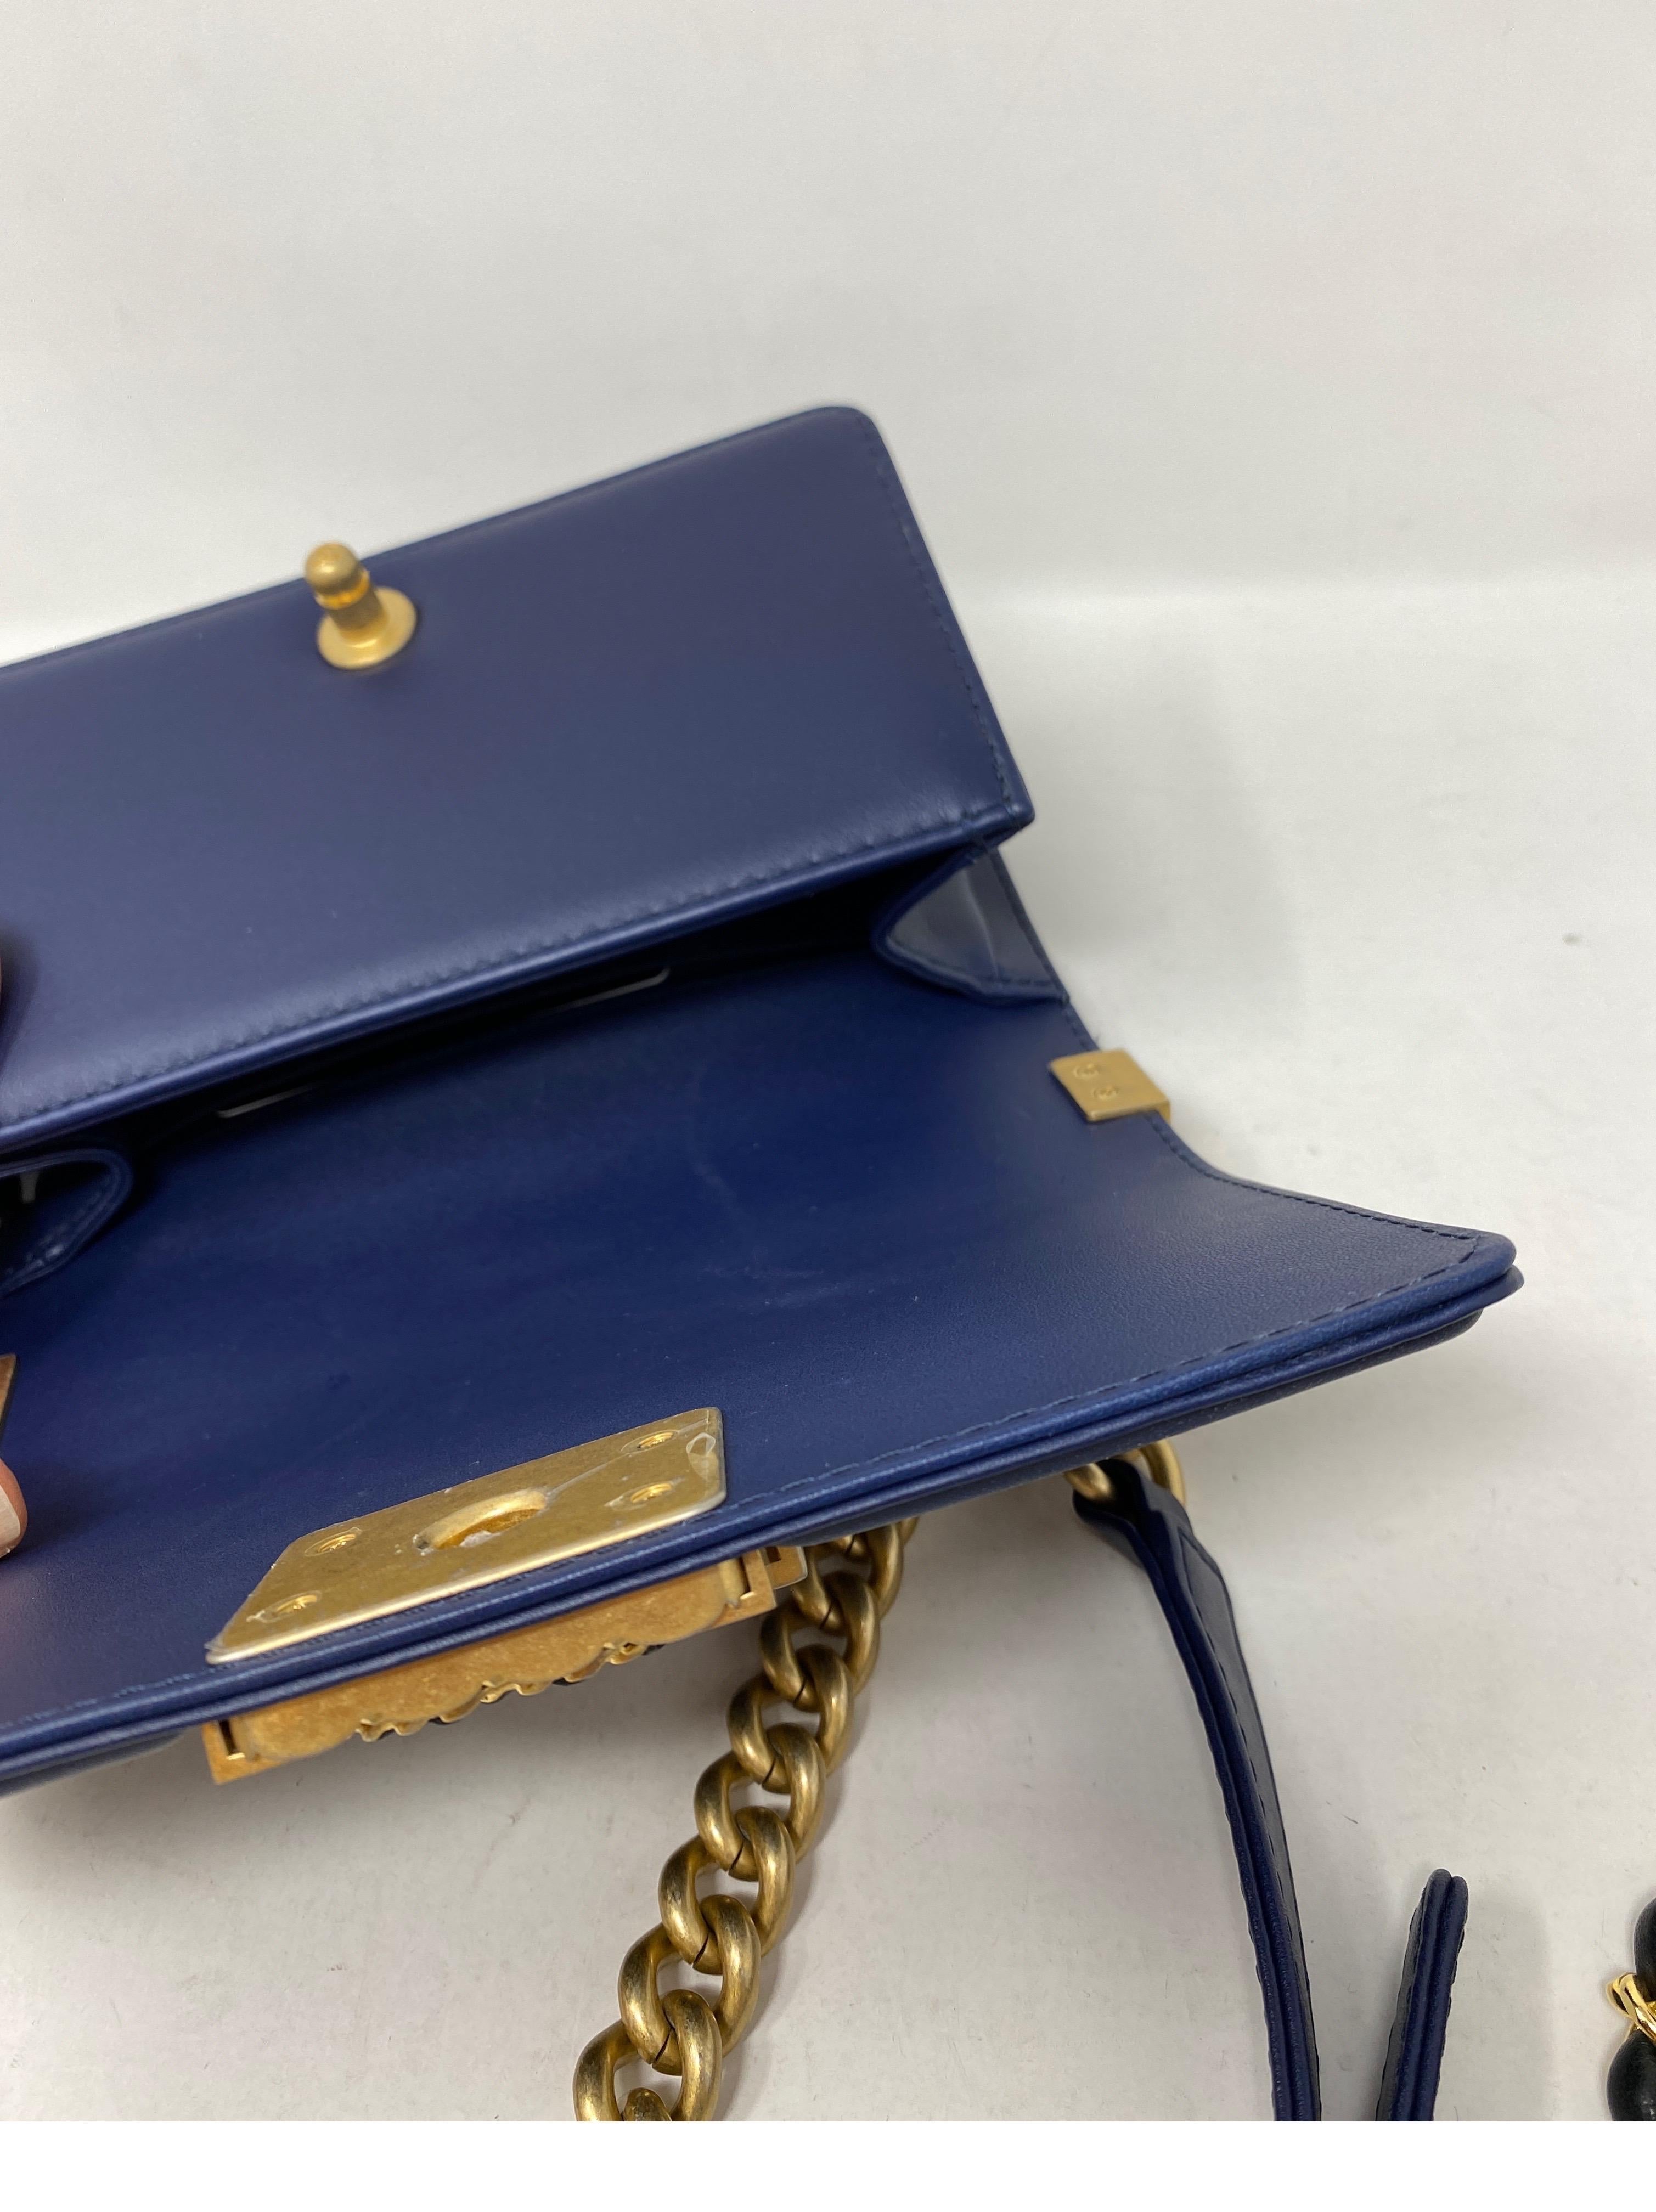 Chanel Mini Boy Limited Edition Navy Bag 5